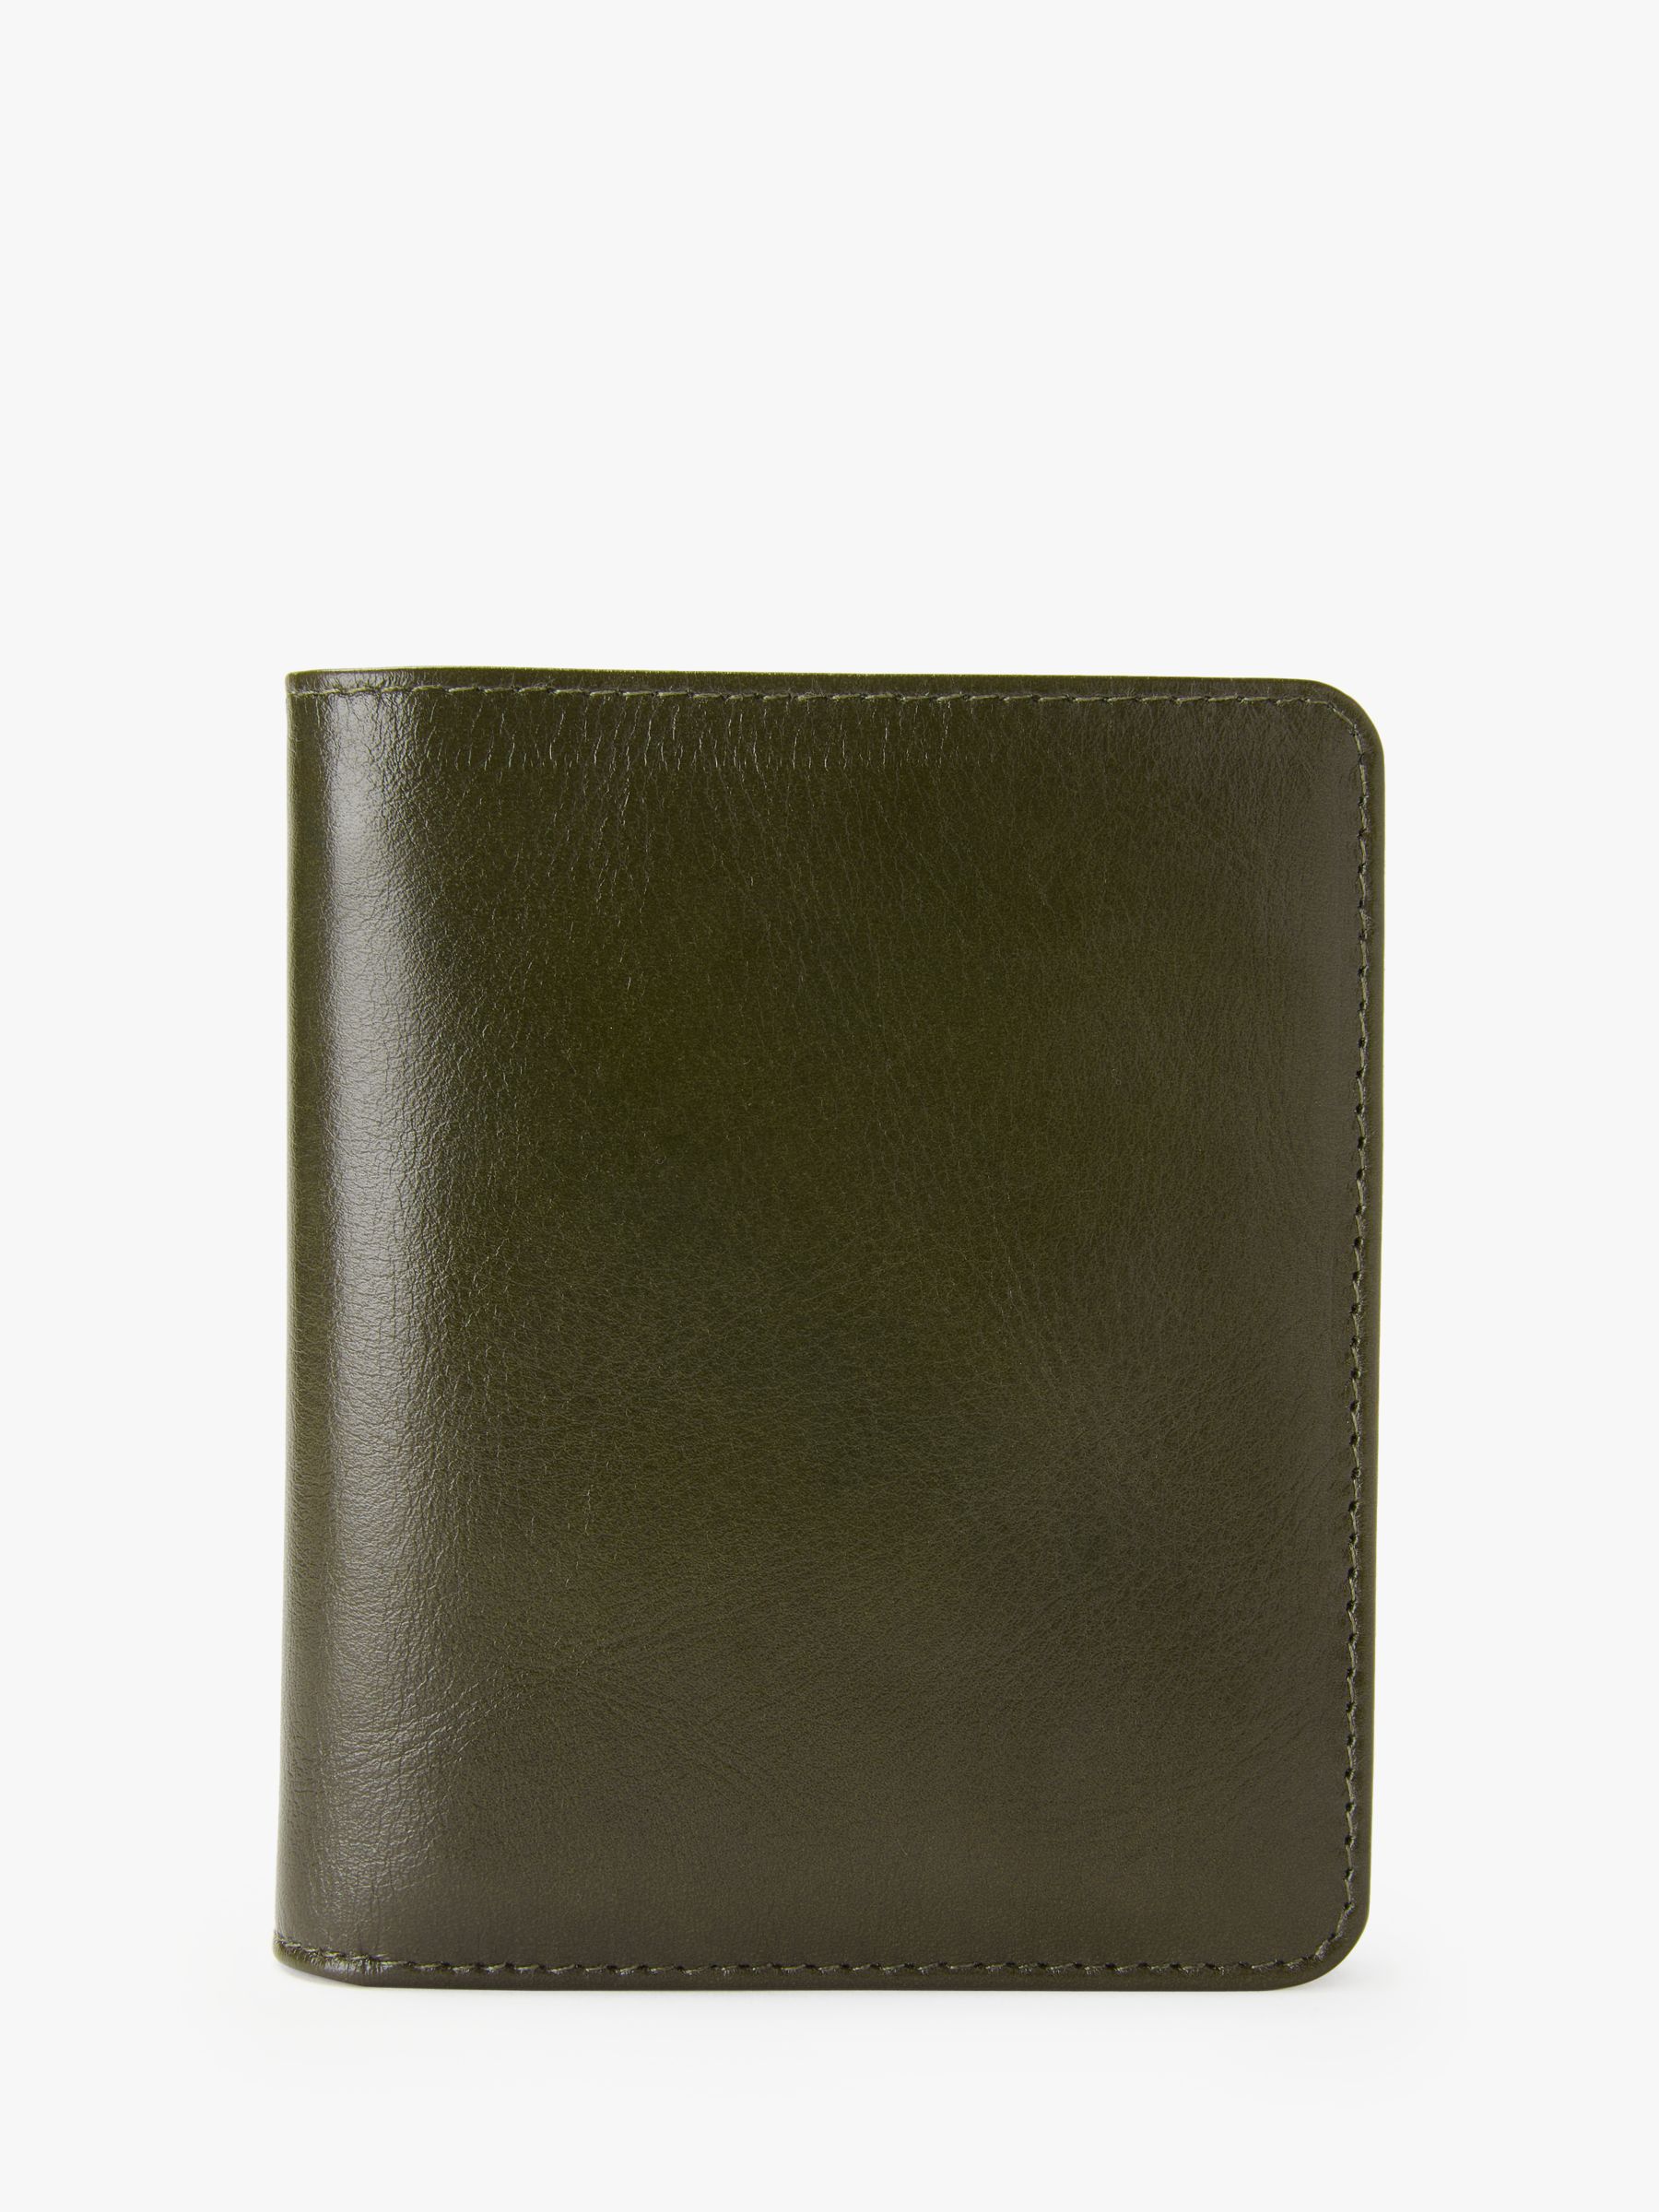 John Lewis & Partners Alana Leather Medium Foldover Purse